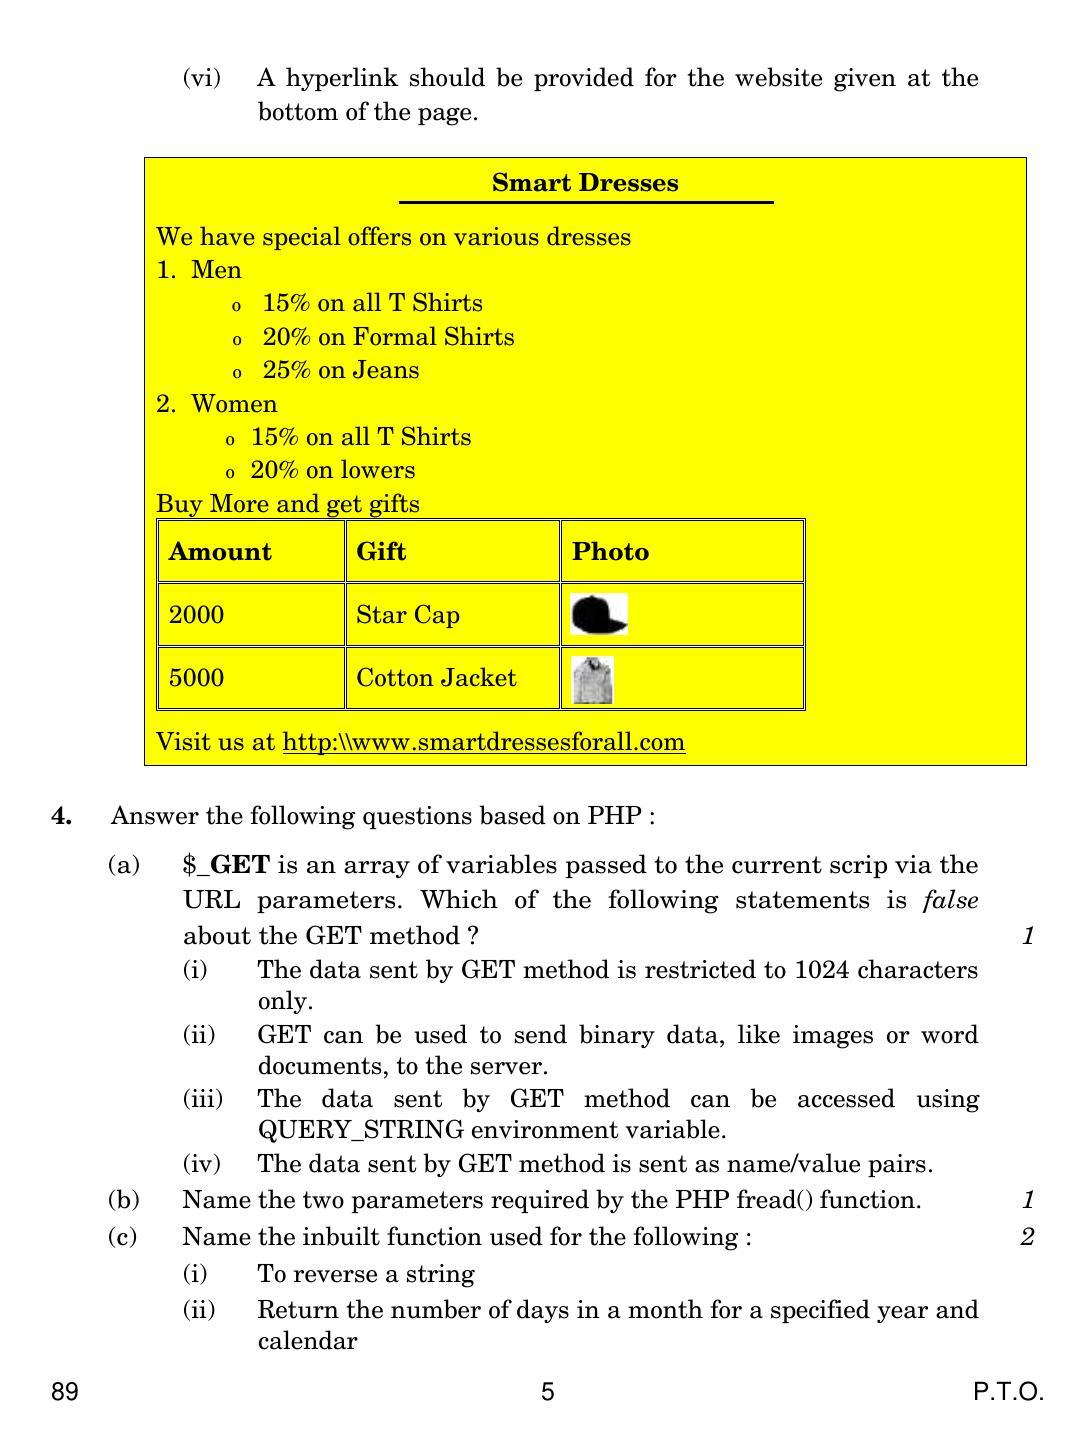 CBSE Class 12 89 MULTIMEDIA & WEB TECH. 2019 Compartment Question Paper - Page 5